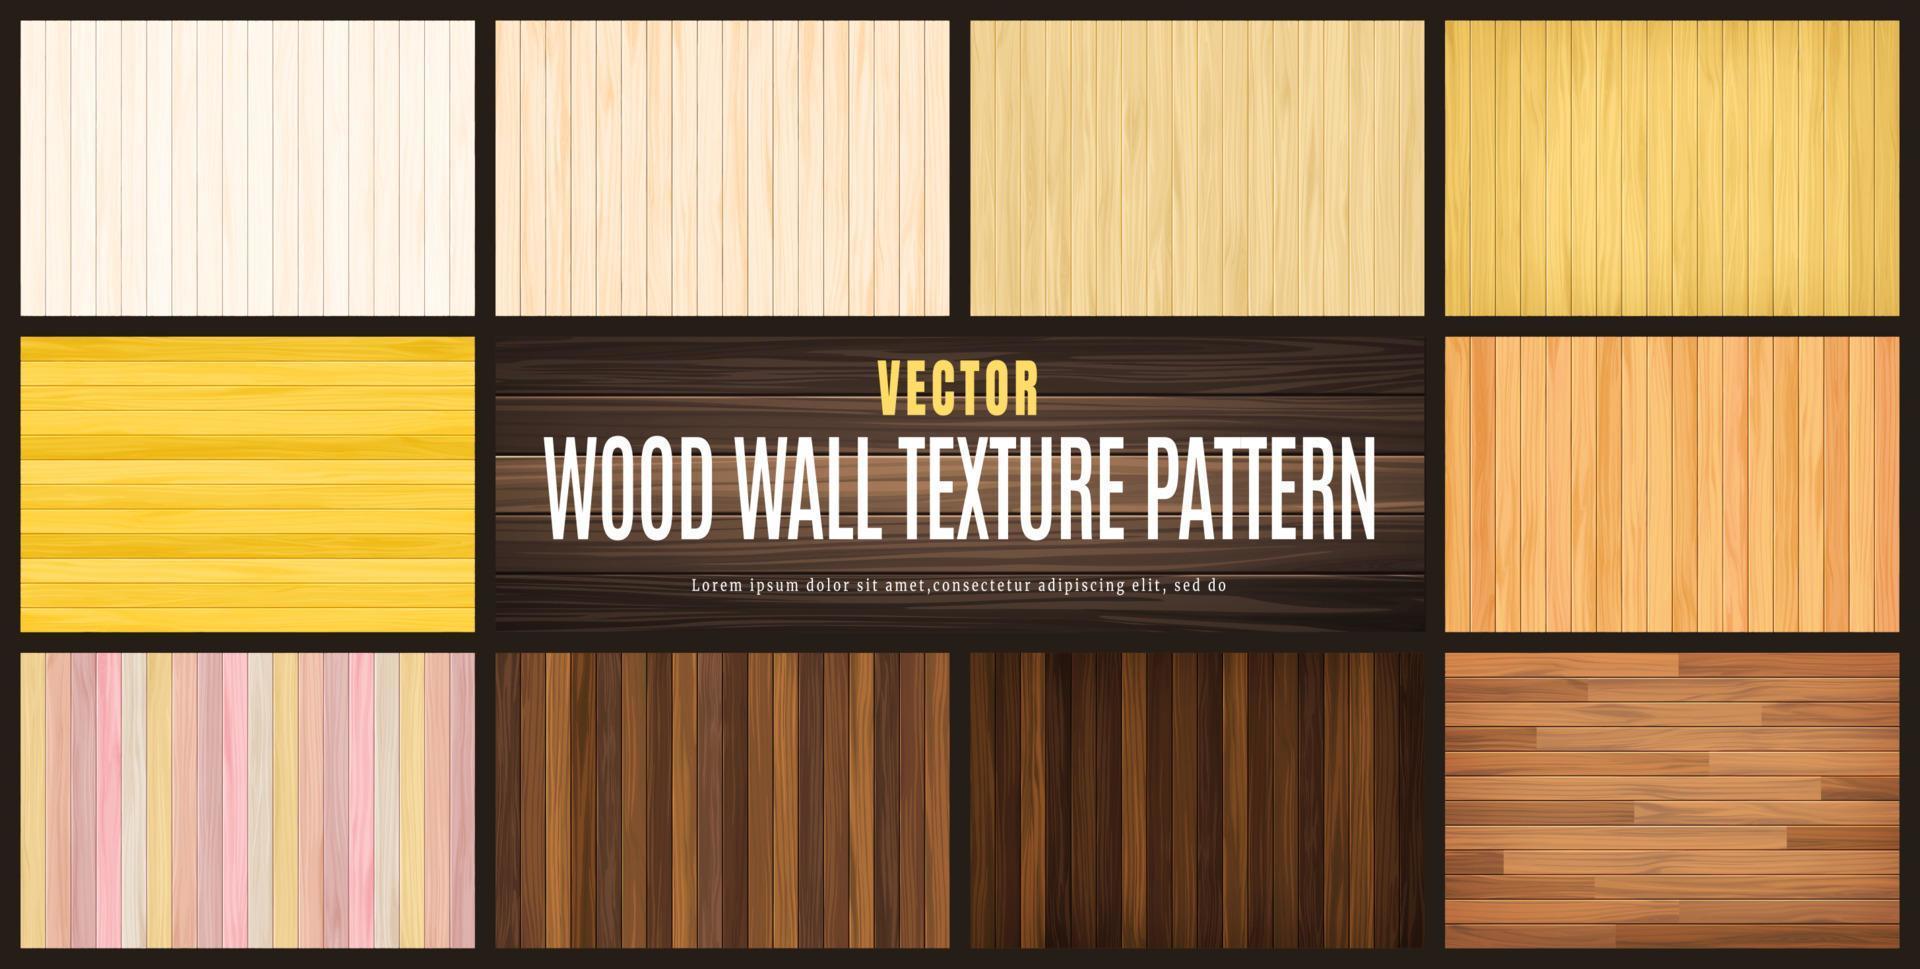 ilustración vectorial belleza madera pared piso textura patrón fondo colección conjunto vector